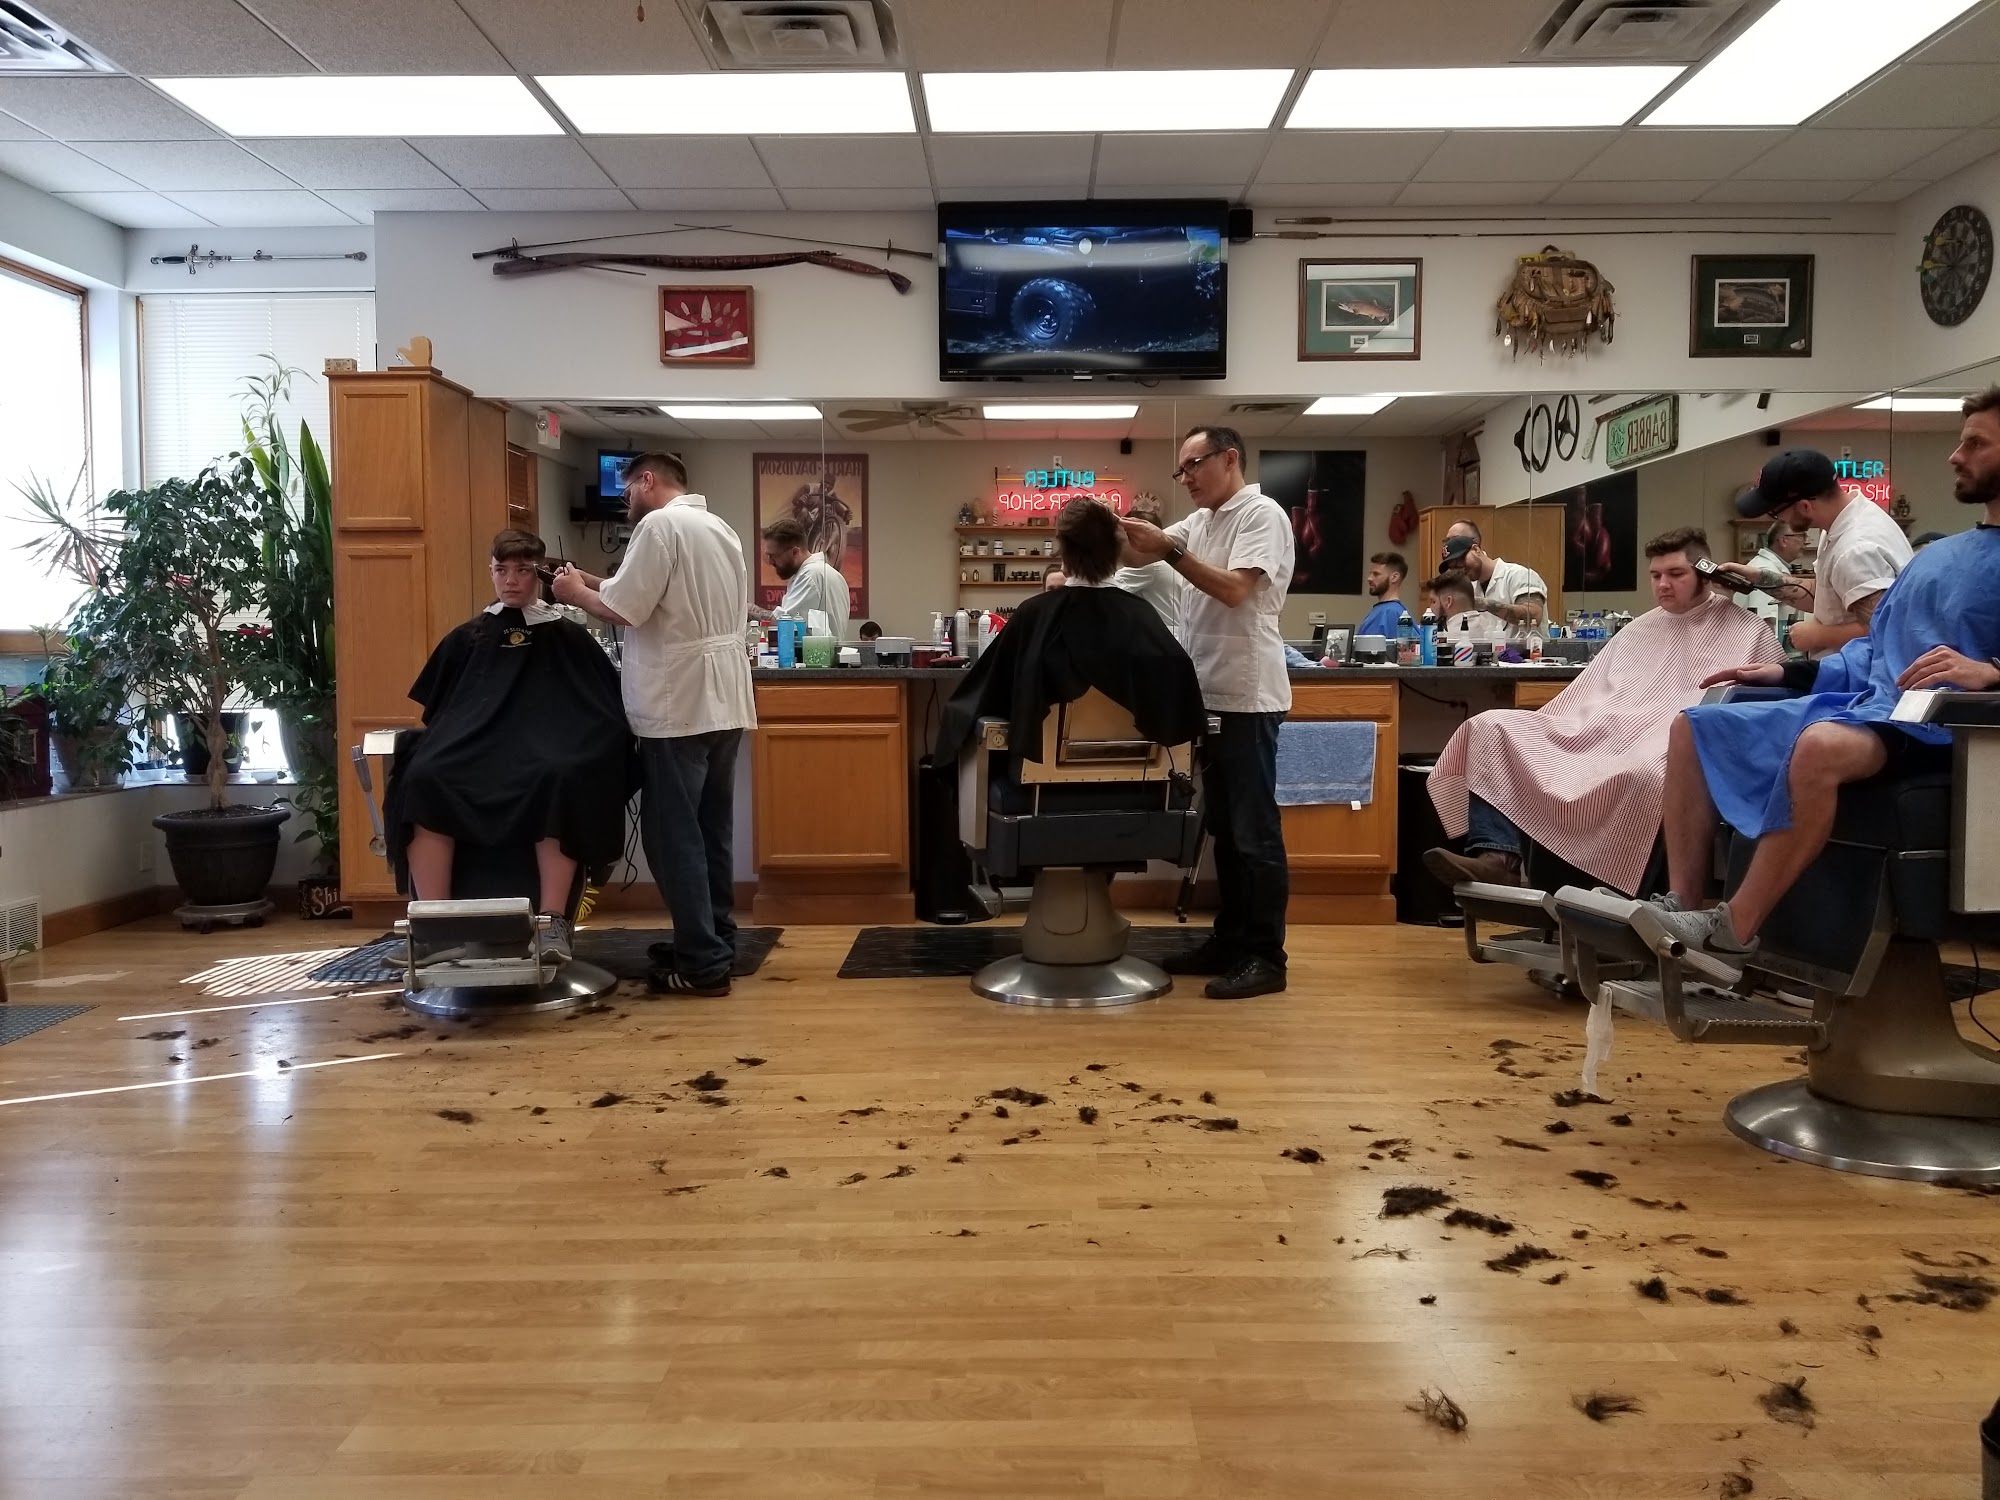 Butler & Son's Barber Shop